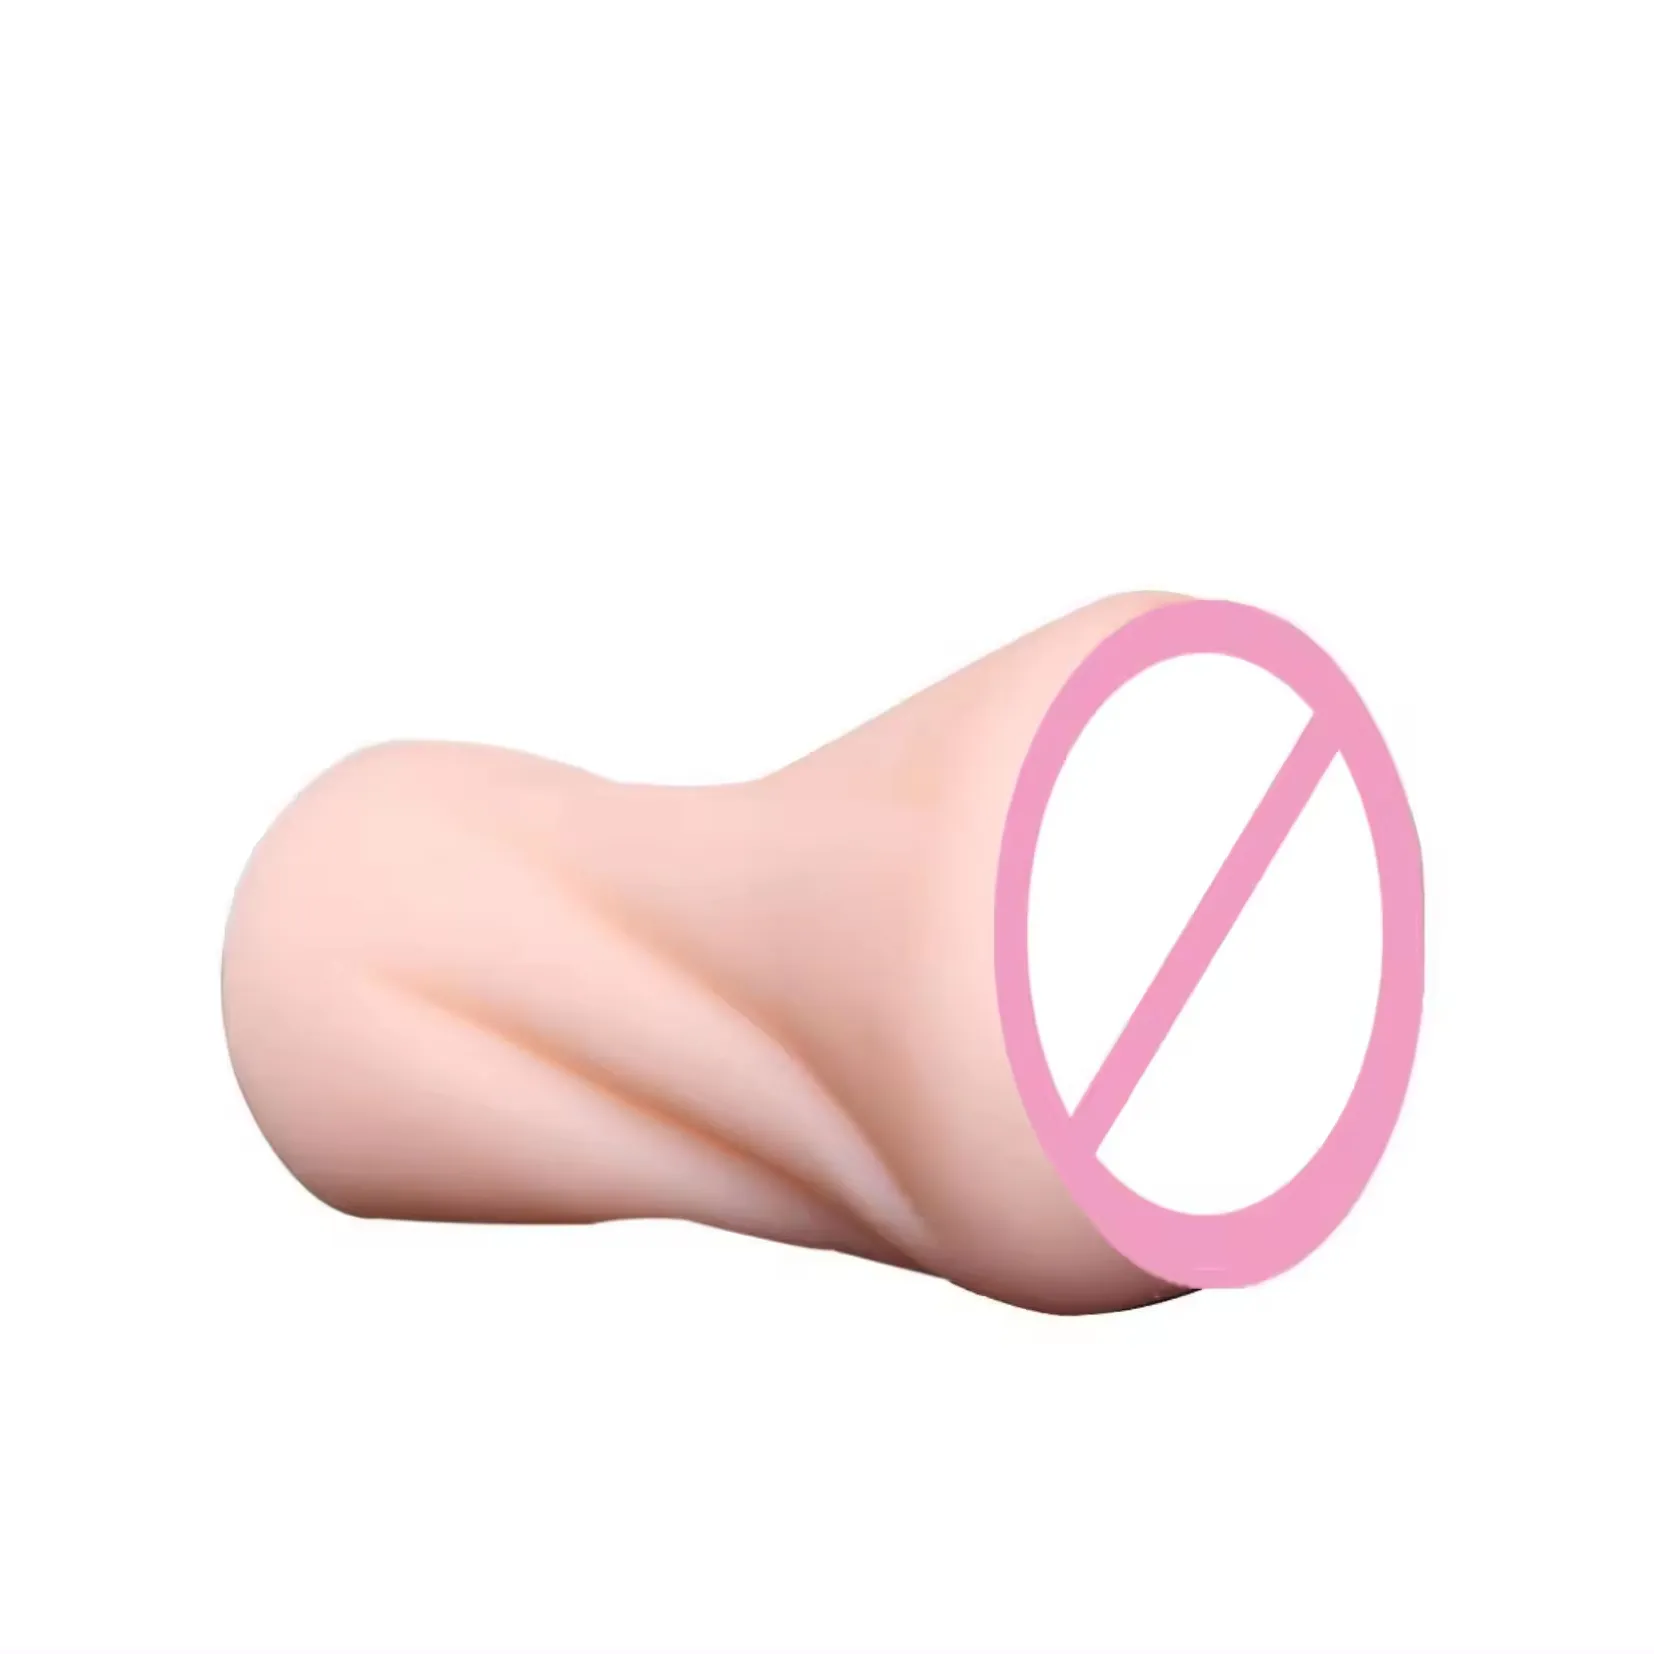 erwachsene frauen silikon vulva männer spielzeug männer masturbation becher sexspielzeug